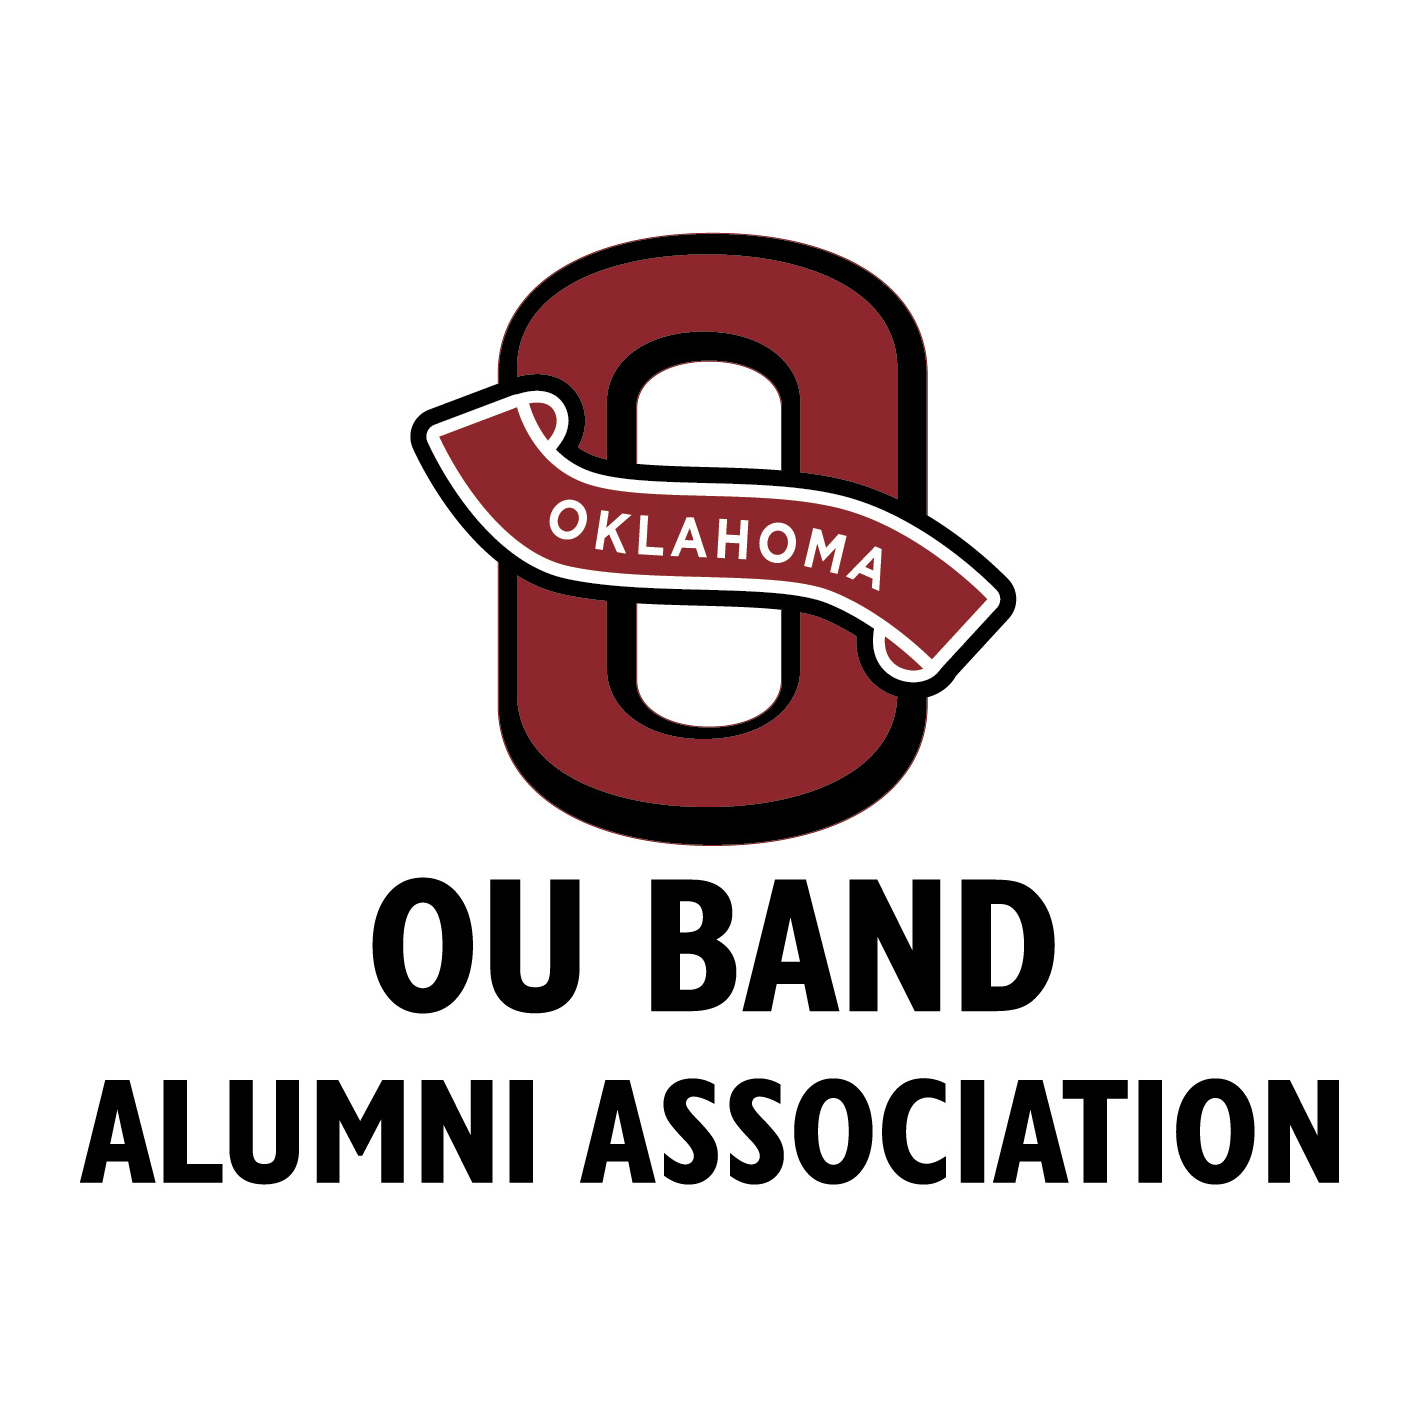 OU Band Alumni Association